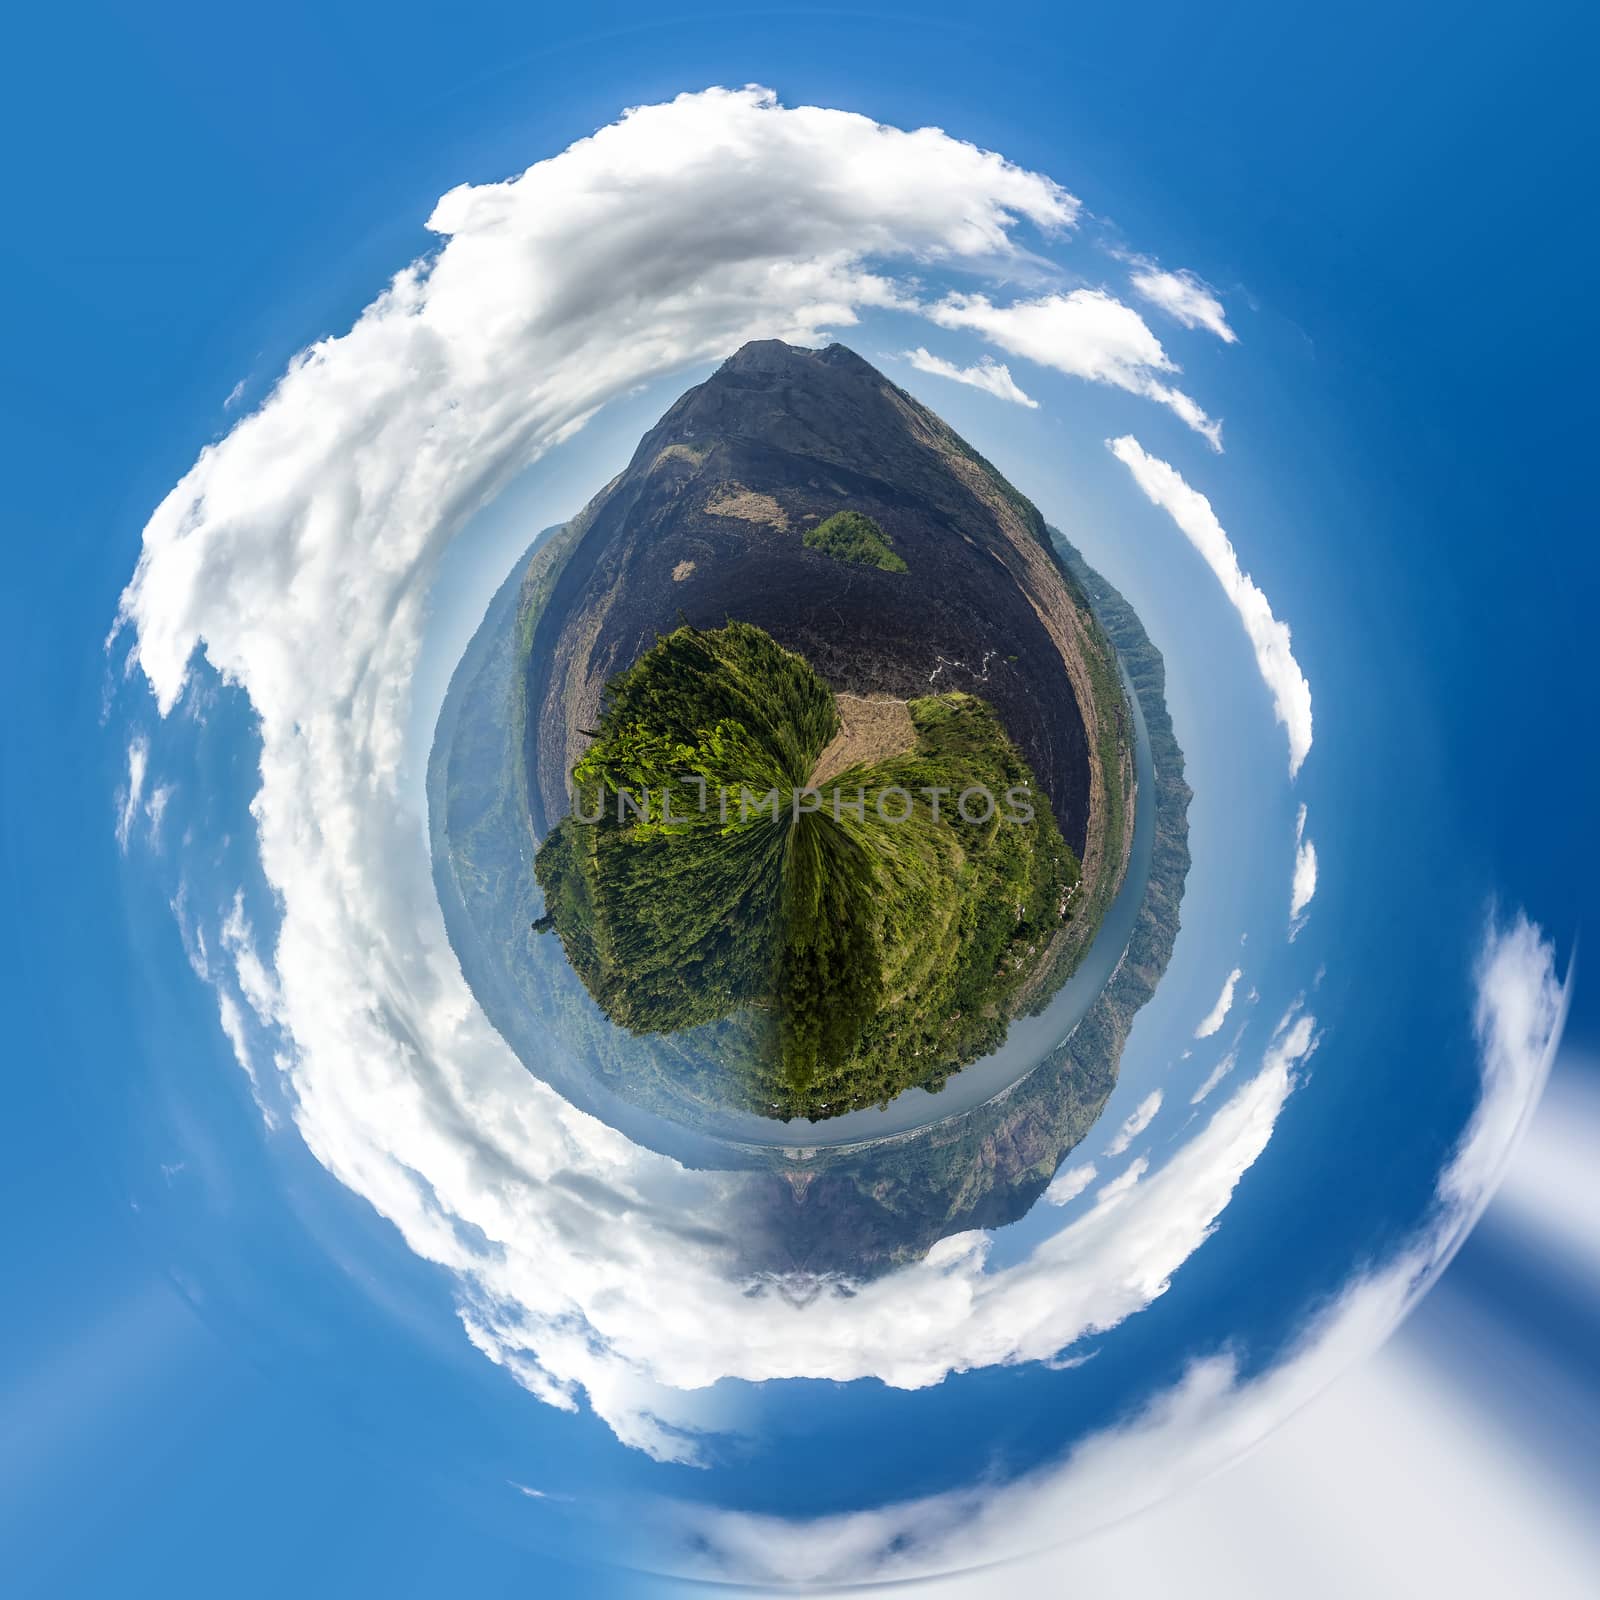 Tiny green planet indonesia, Batur by artush